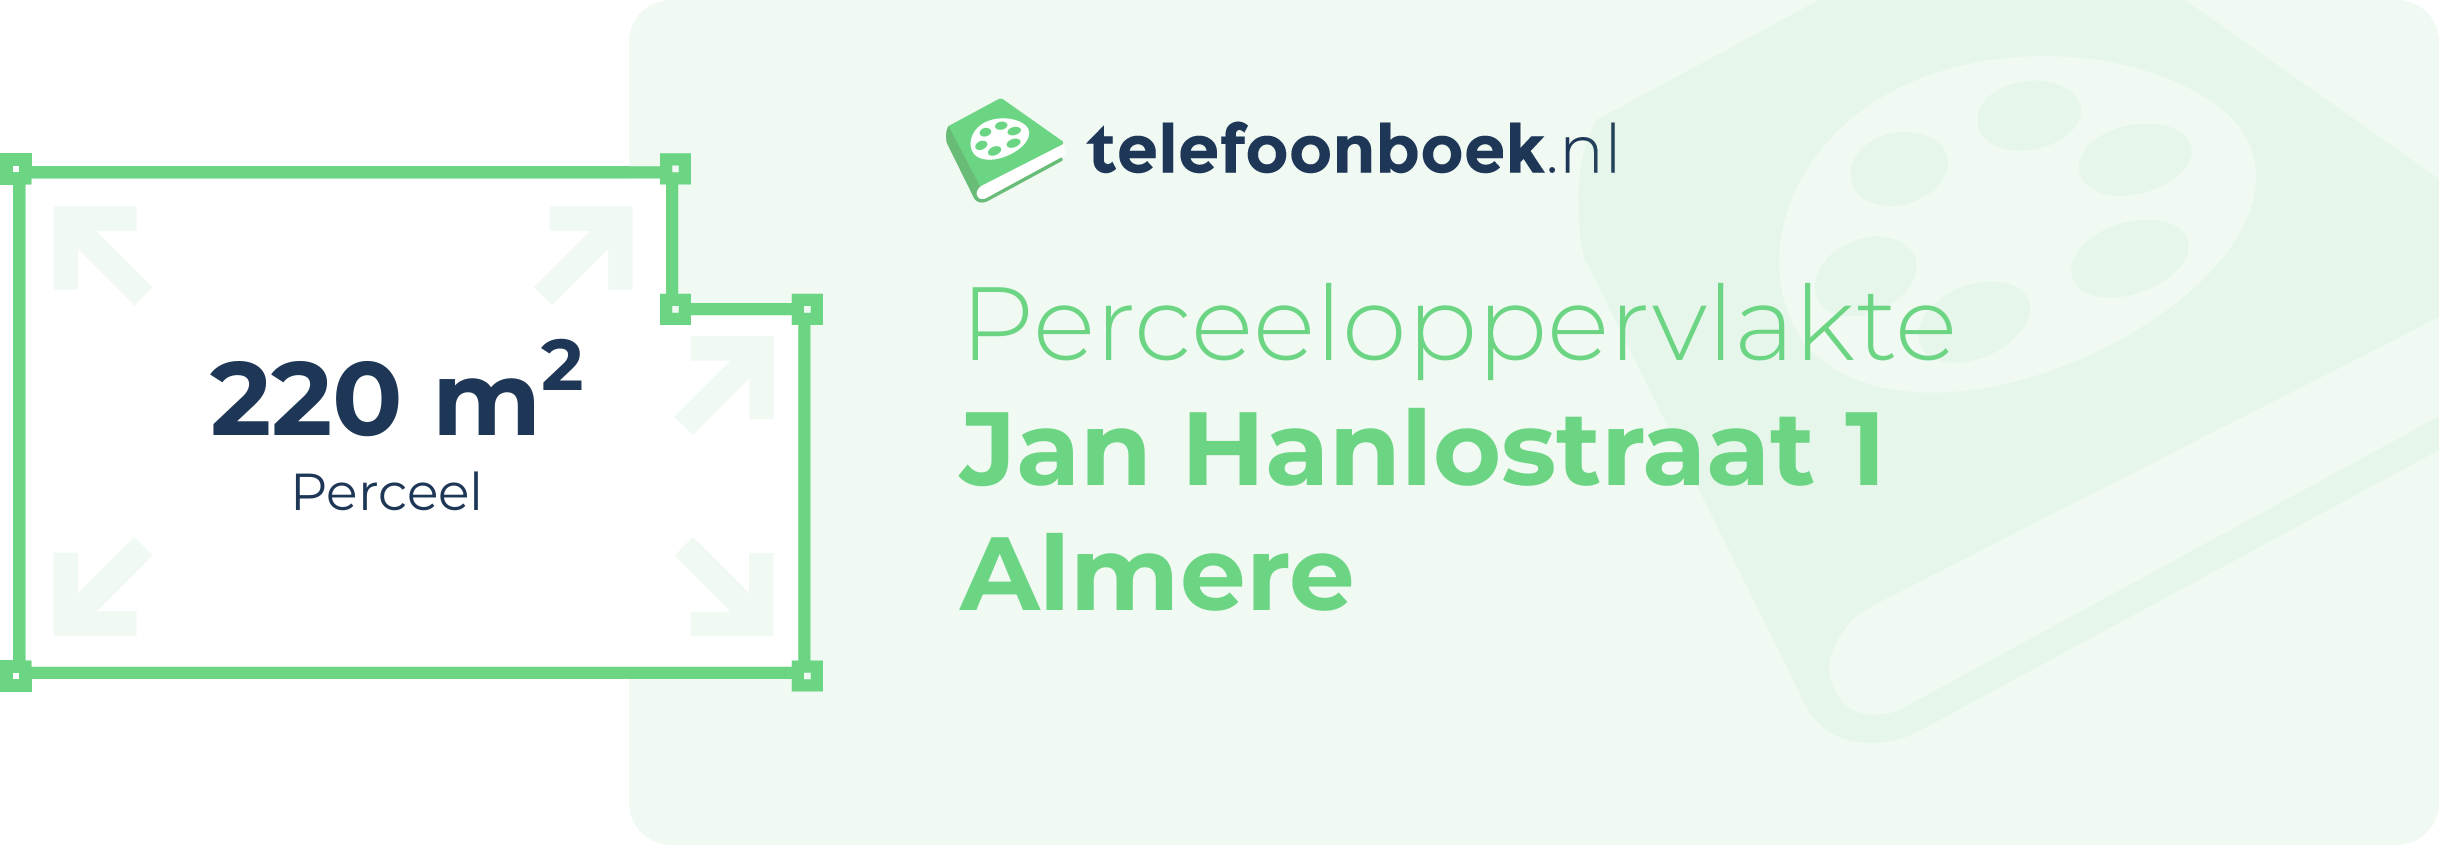 Perceeloppervlakte Jan Hanlostraat 1 Almere